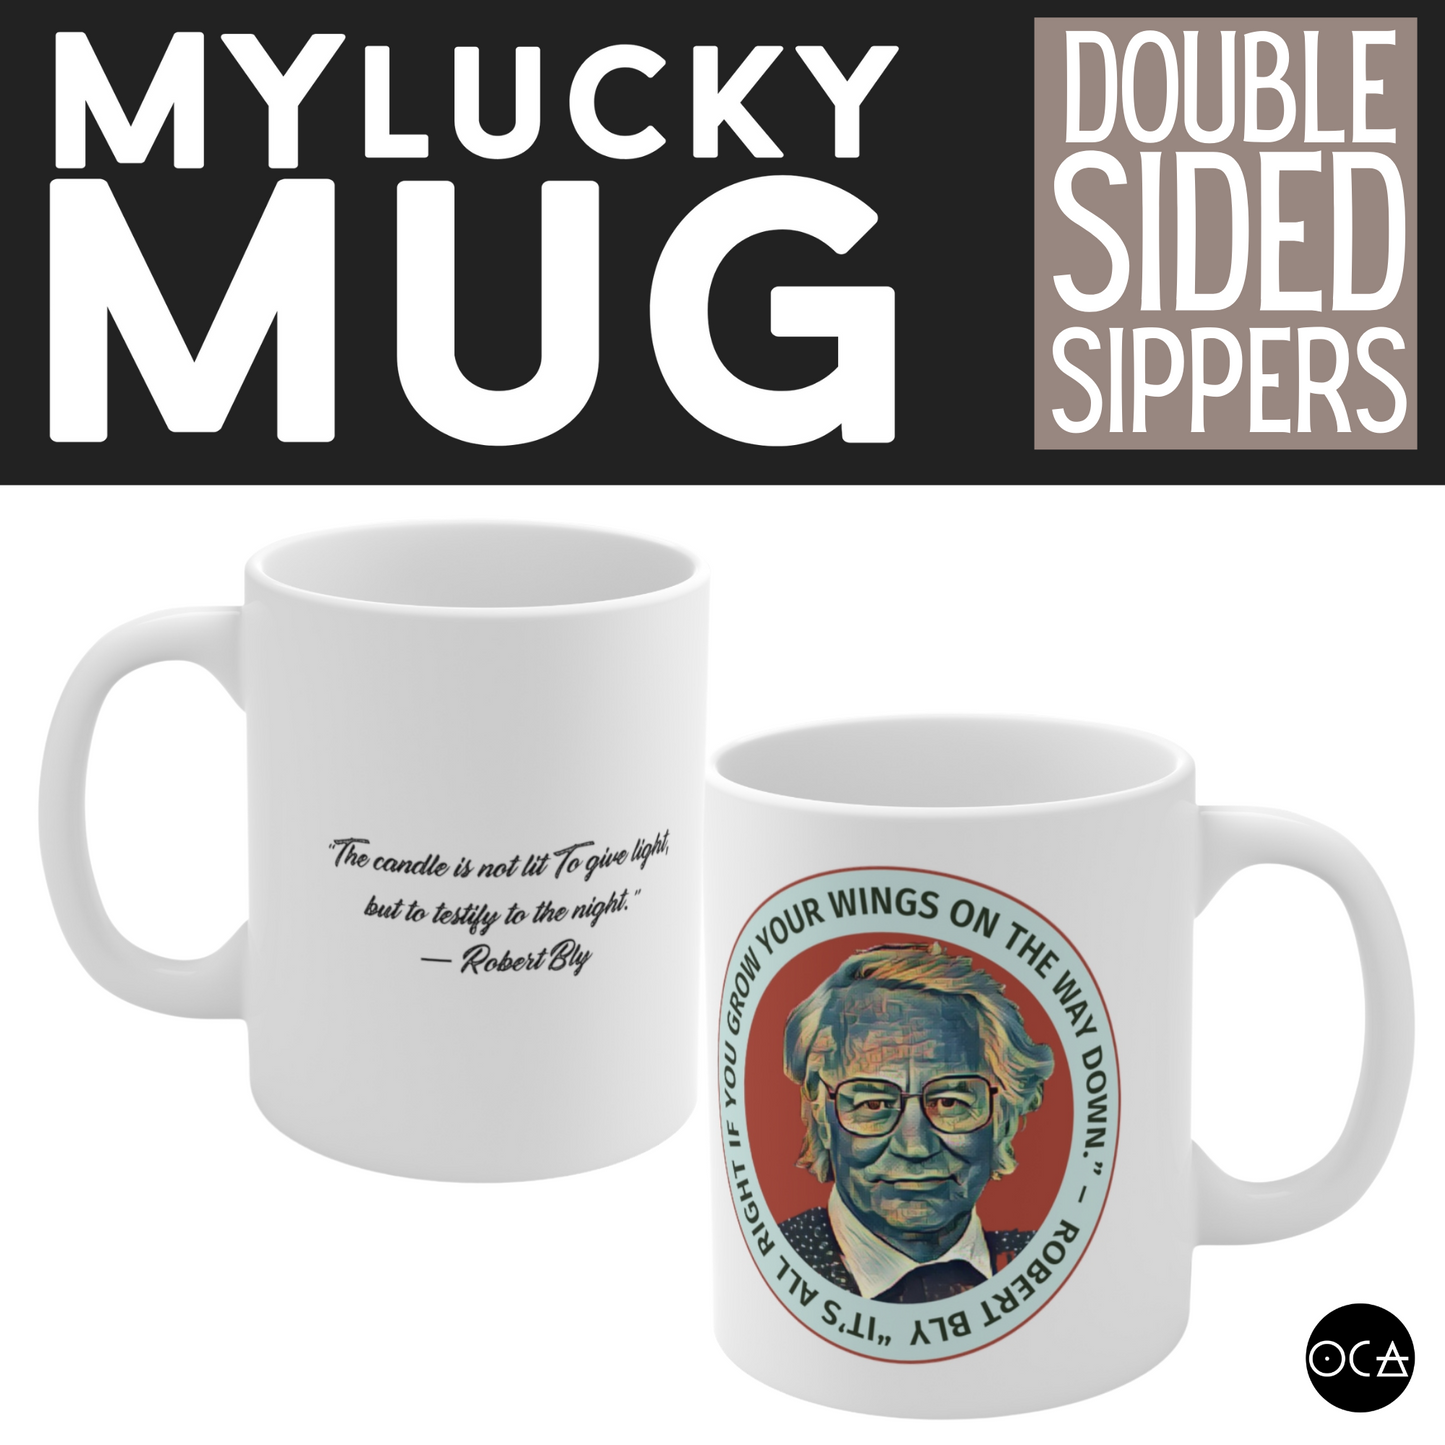 Robert Bly Mug (Doublesided)